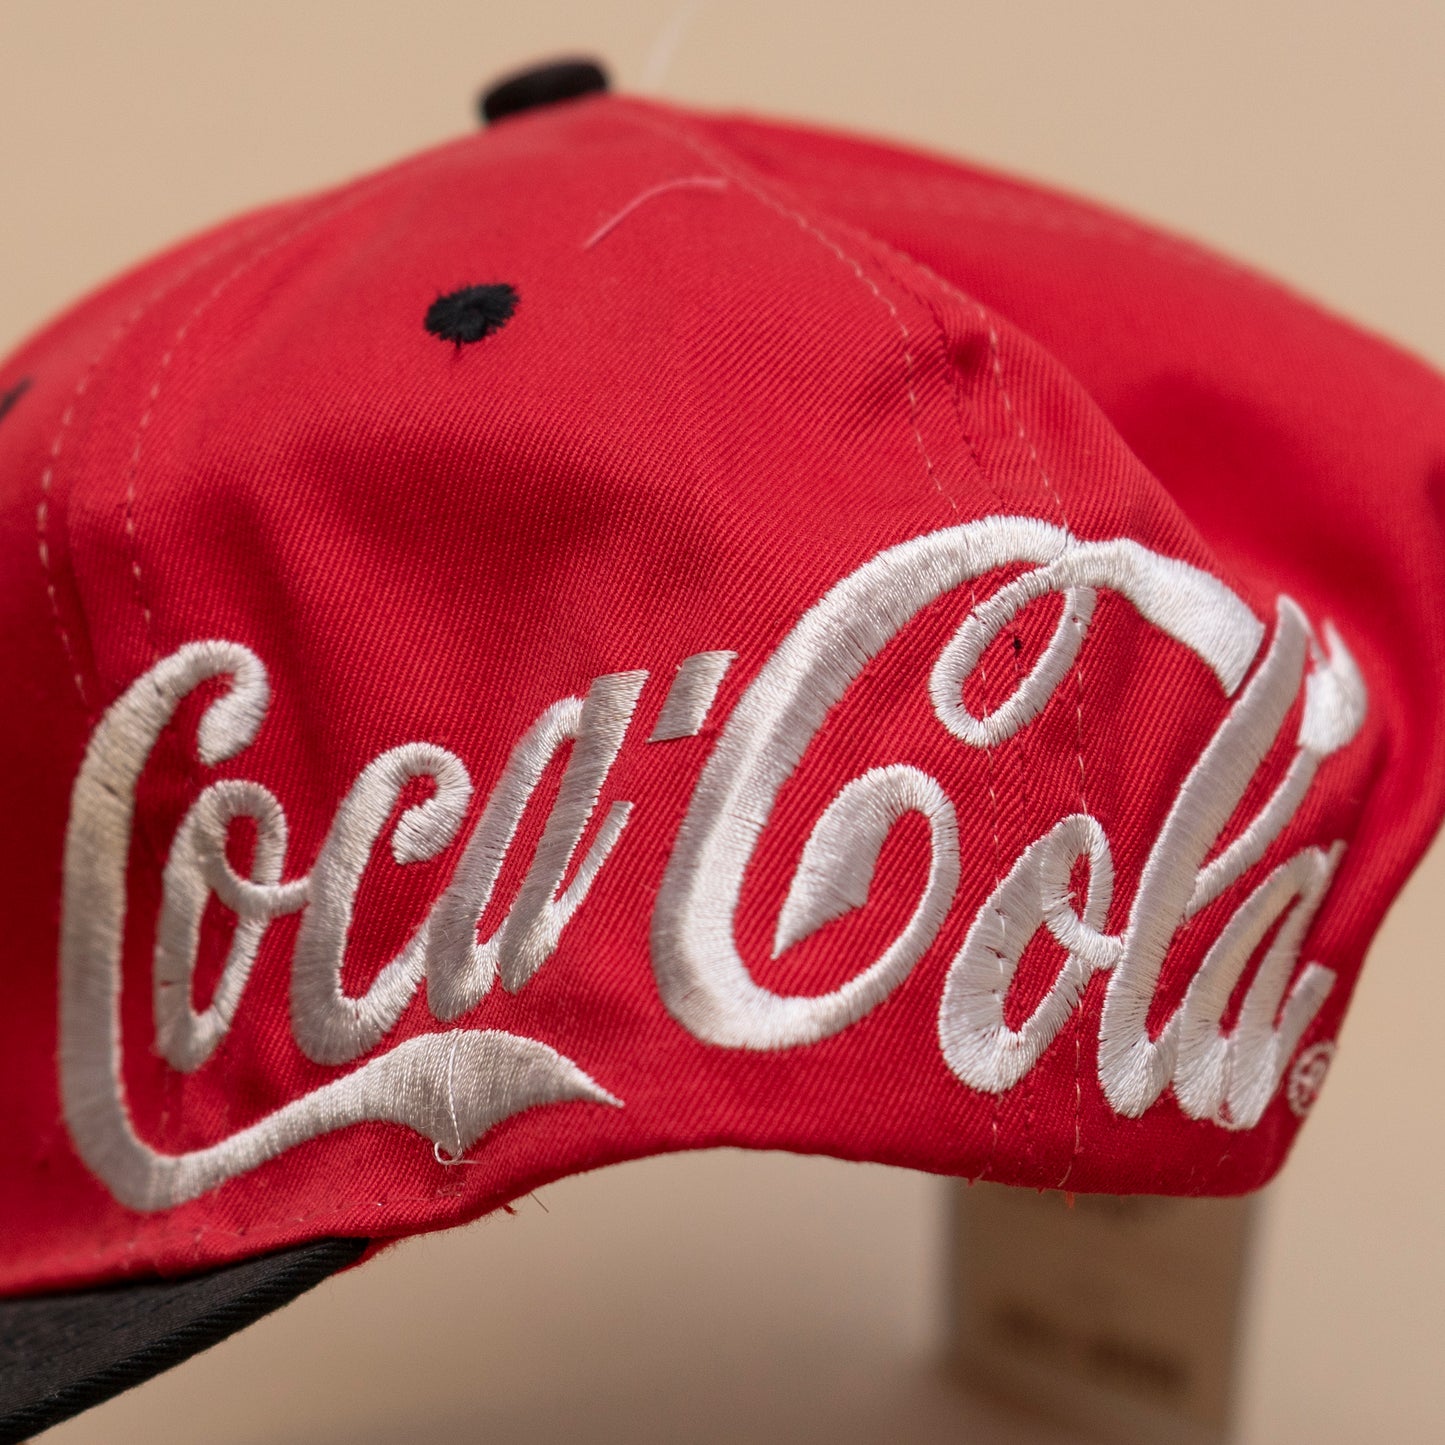 Deadstock Coca Cola Snapback Cap